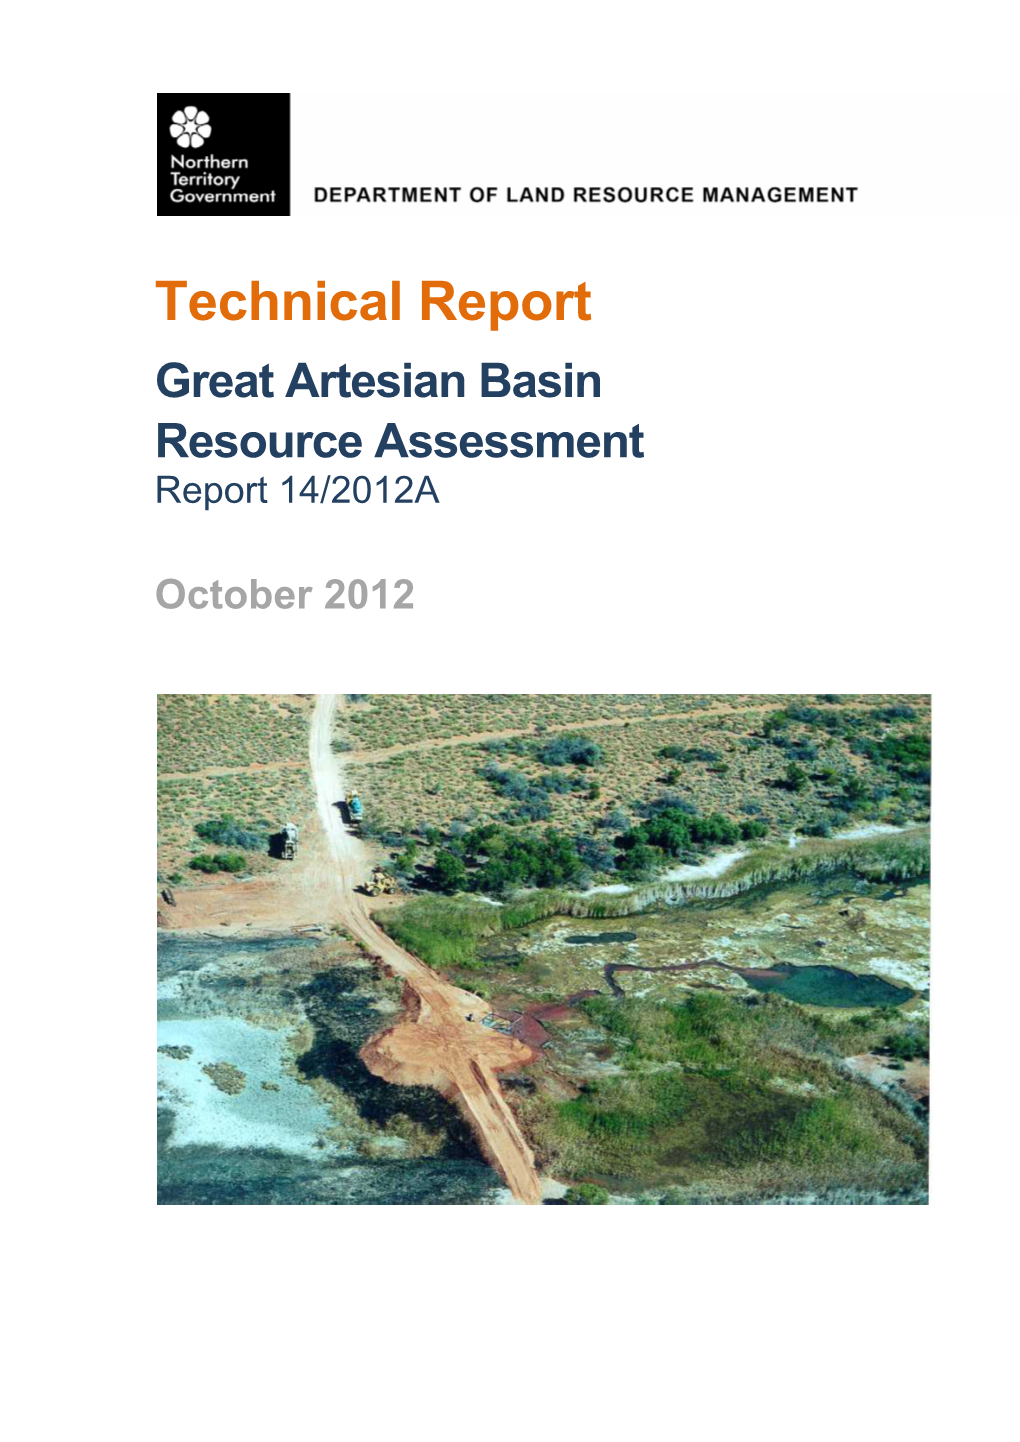 Technical Report Great Artesian Basin Resource Assessment Report 14/2012A